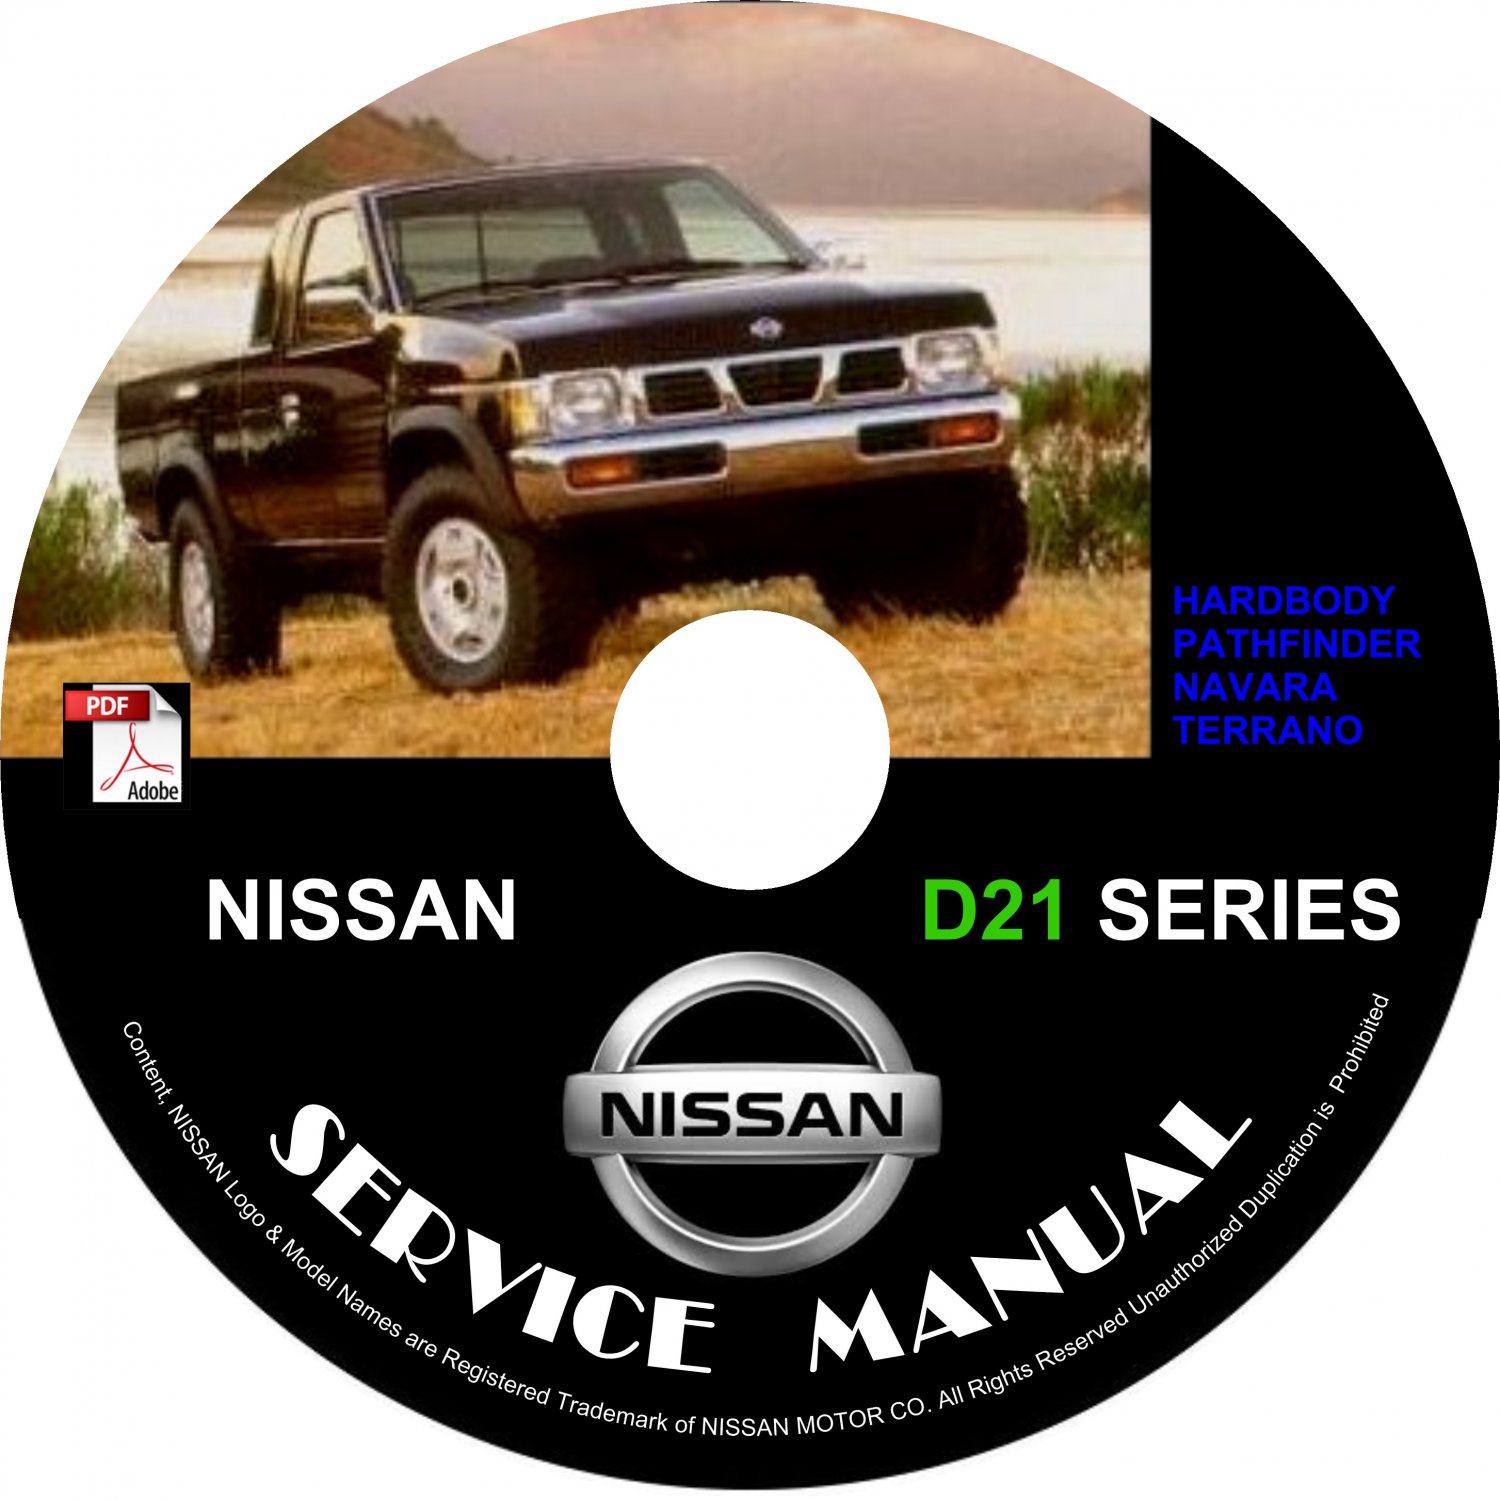 1989 Nissan Hardbody D21 Navara Pathfinder Terrano Service Repair Shop Manual on CD Fix Rebuild